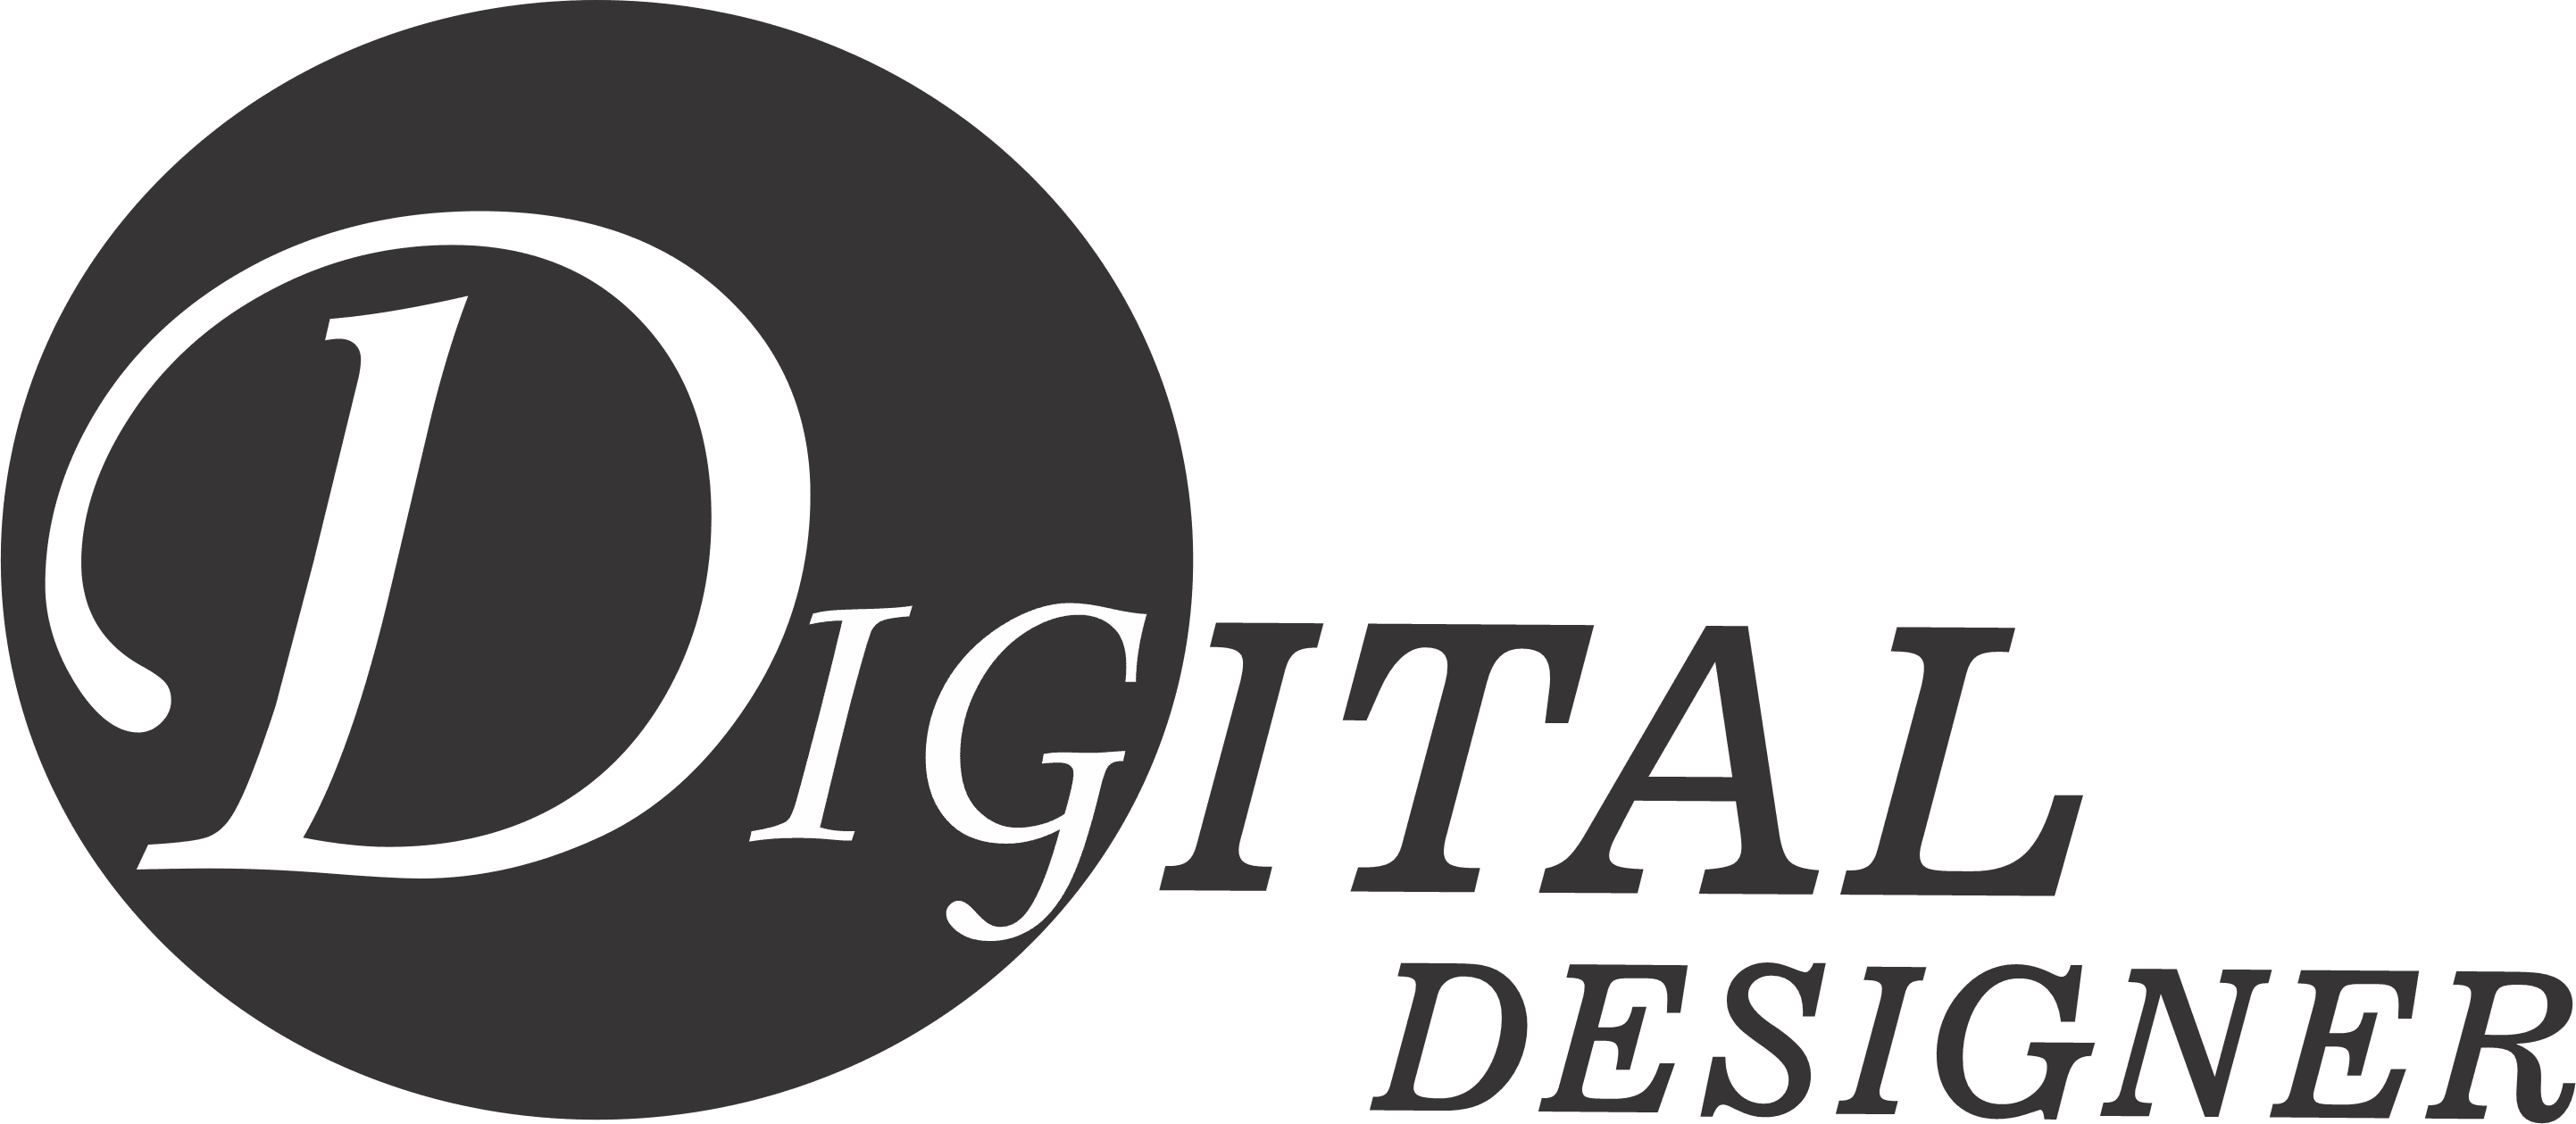 Digital Designer